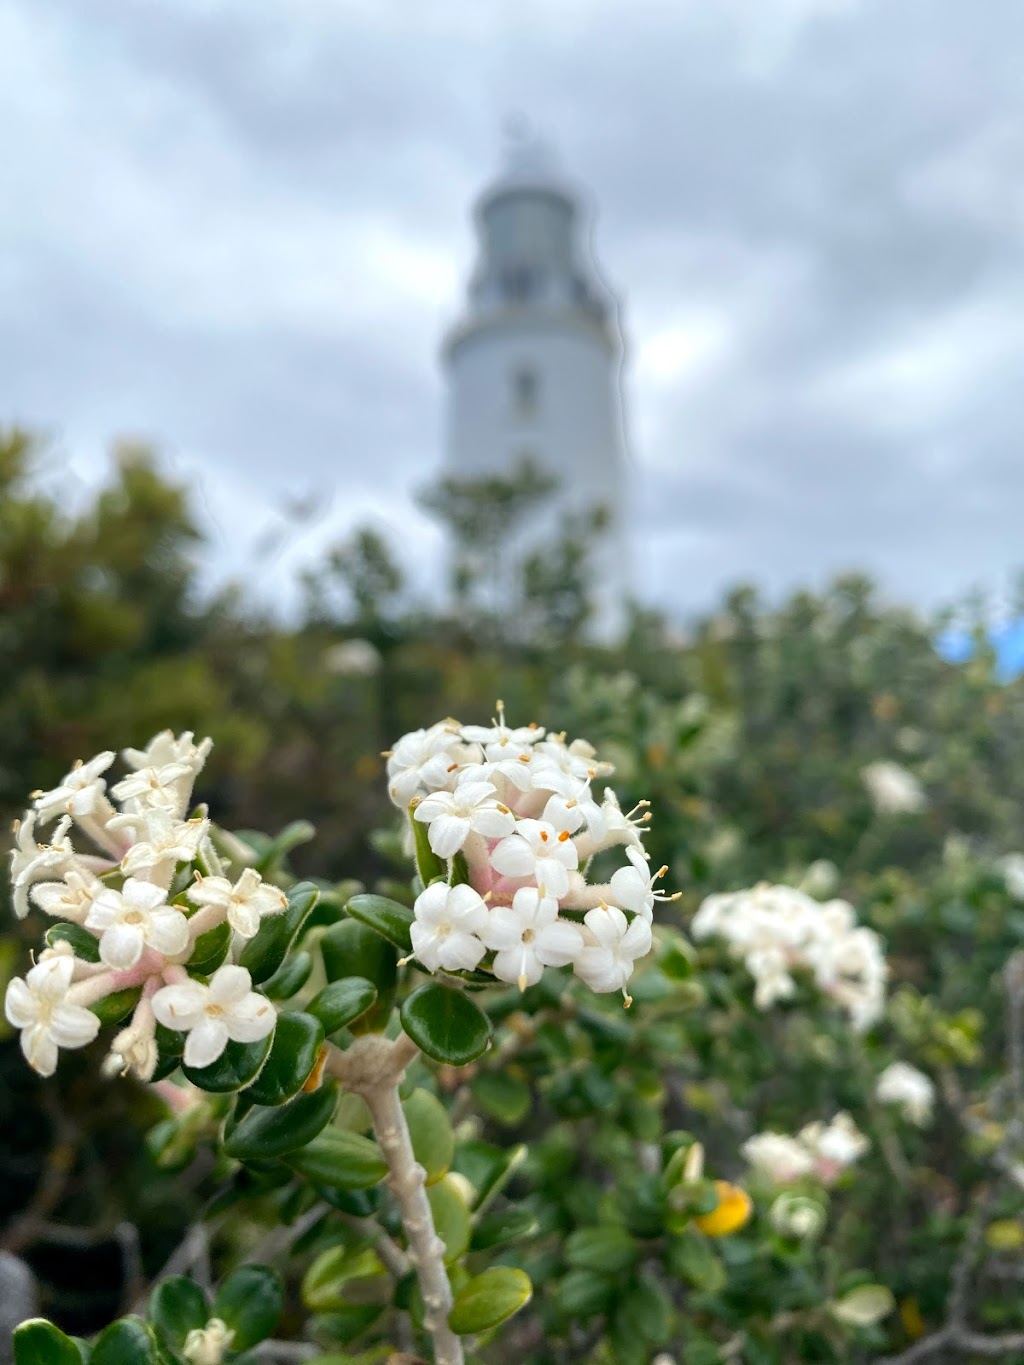 Cape Bruny Lightstation | Cape Bruny Lighthouse, 1750 Lighthouse Rd, South Bruny TAS 7150, Australia